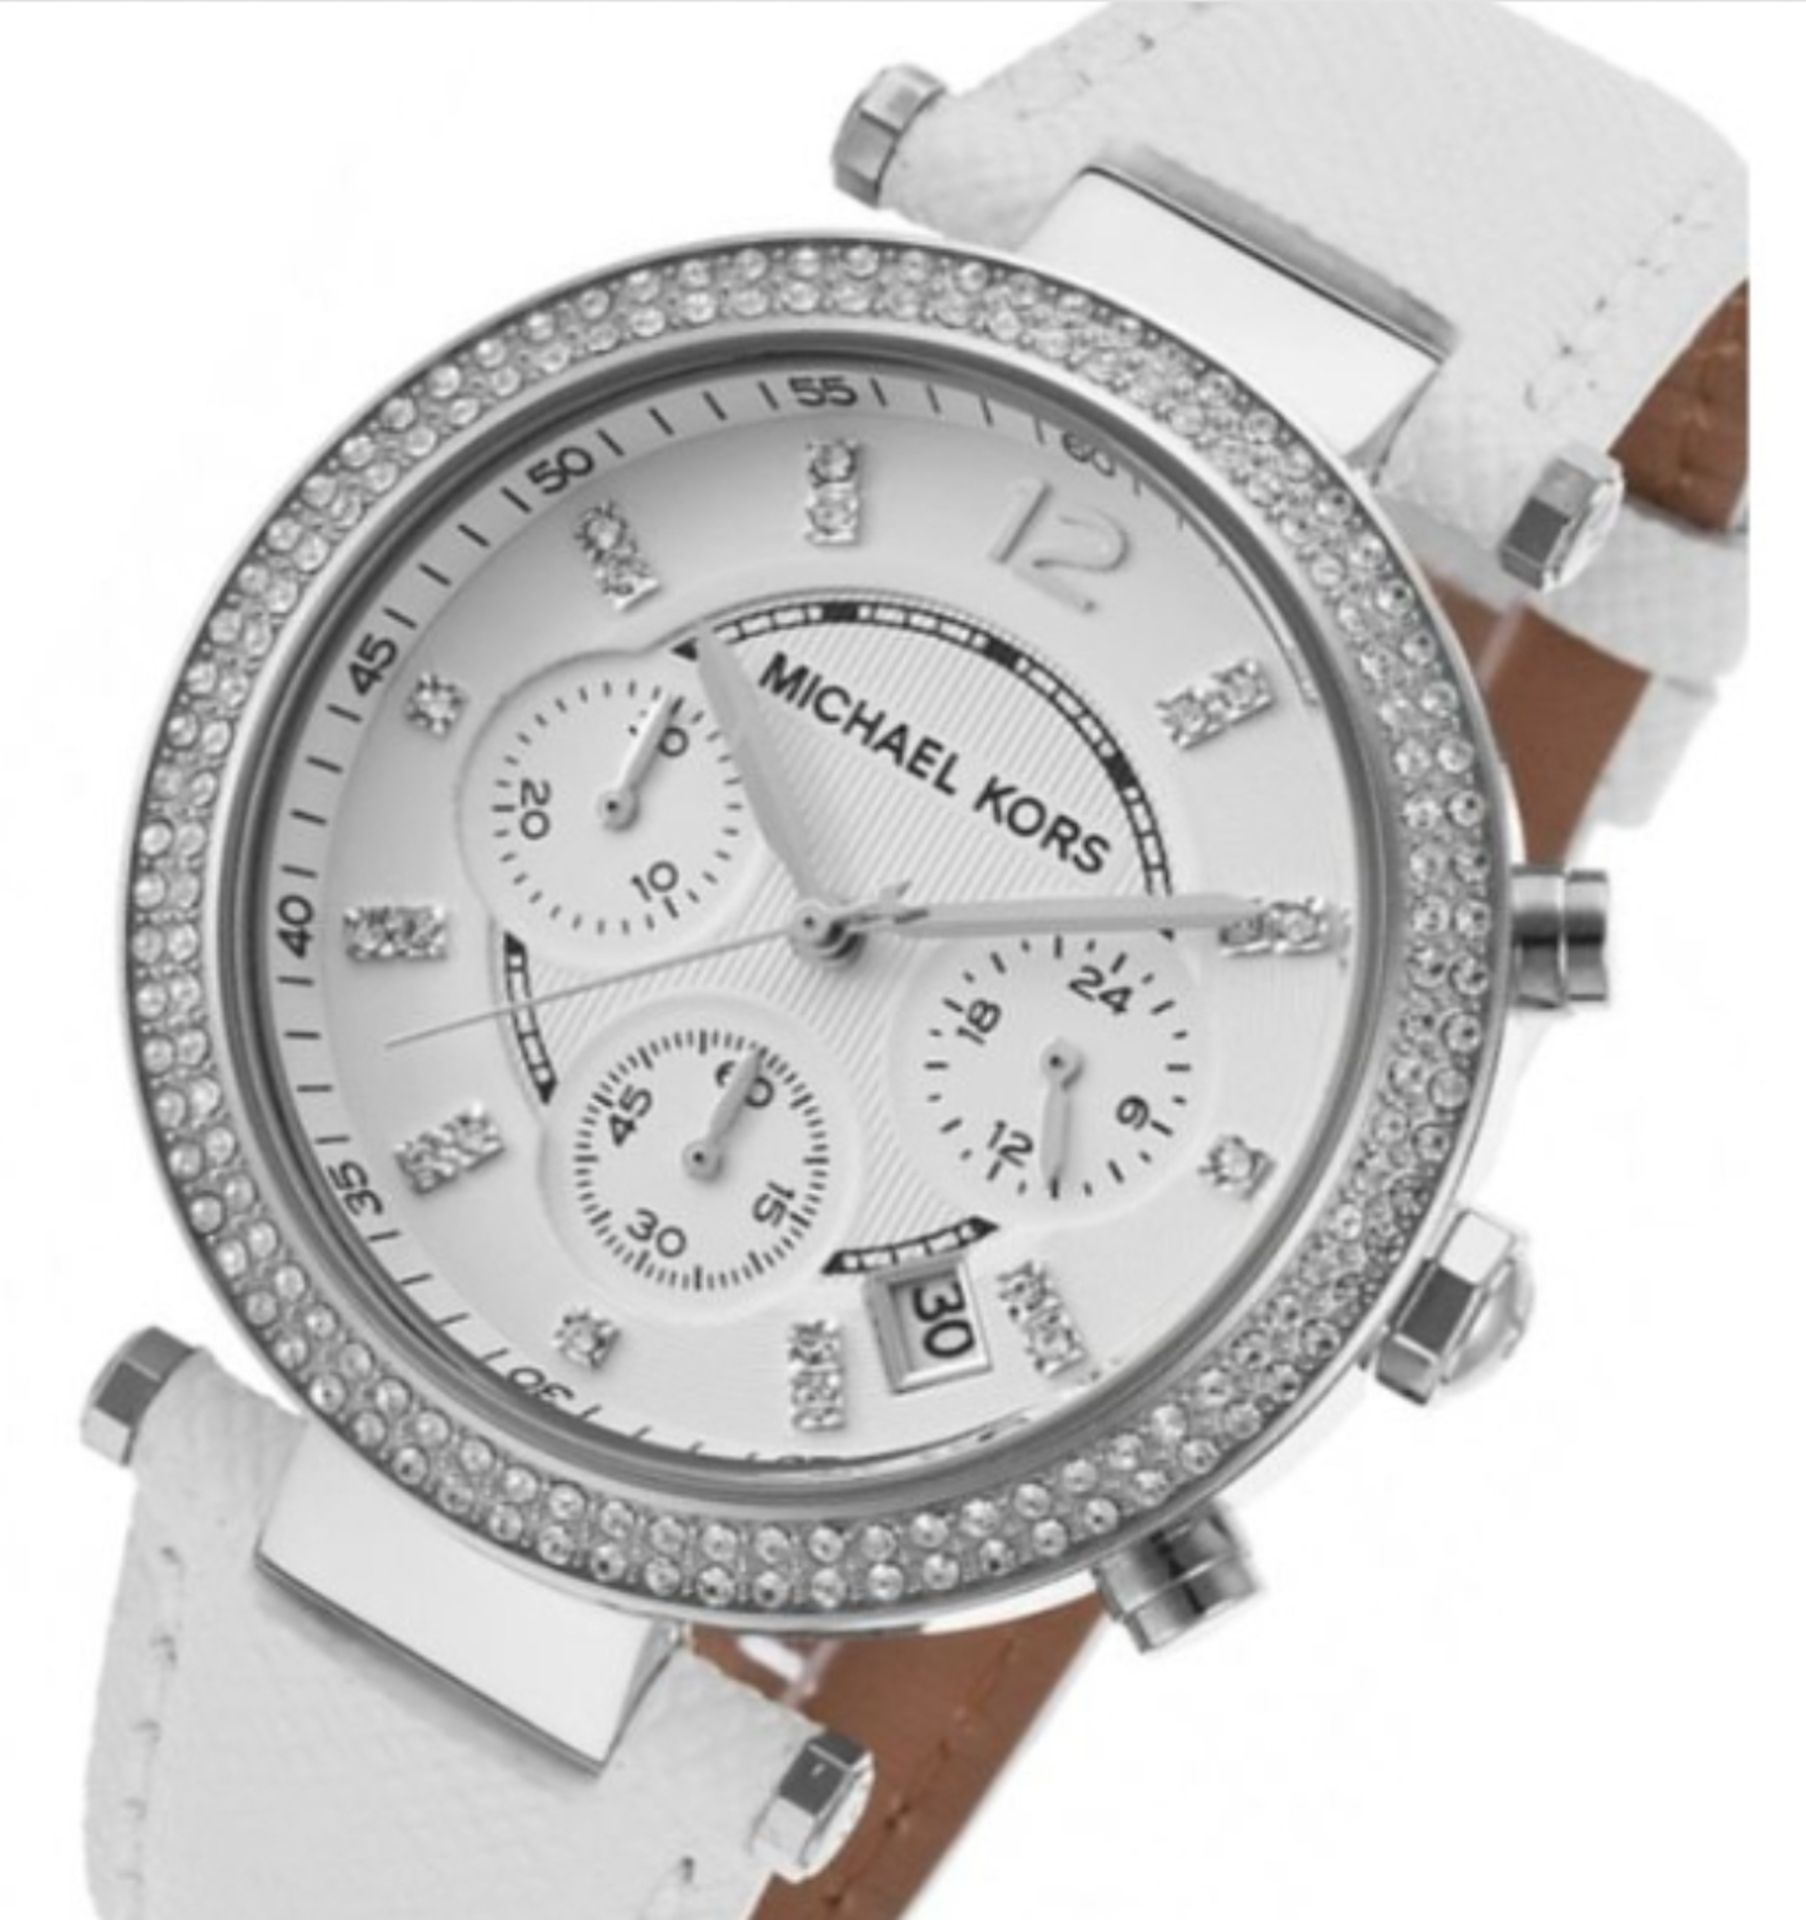 Michael Kors MK2277 Ladies Parker White Leather Strap quartz Chronograph Designer Watch - Image 6 of 8